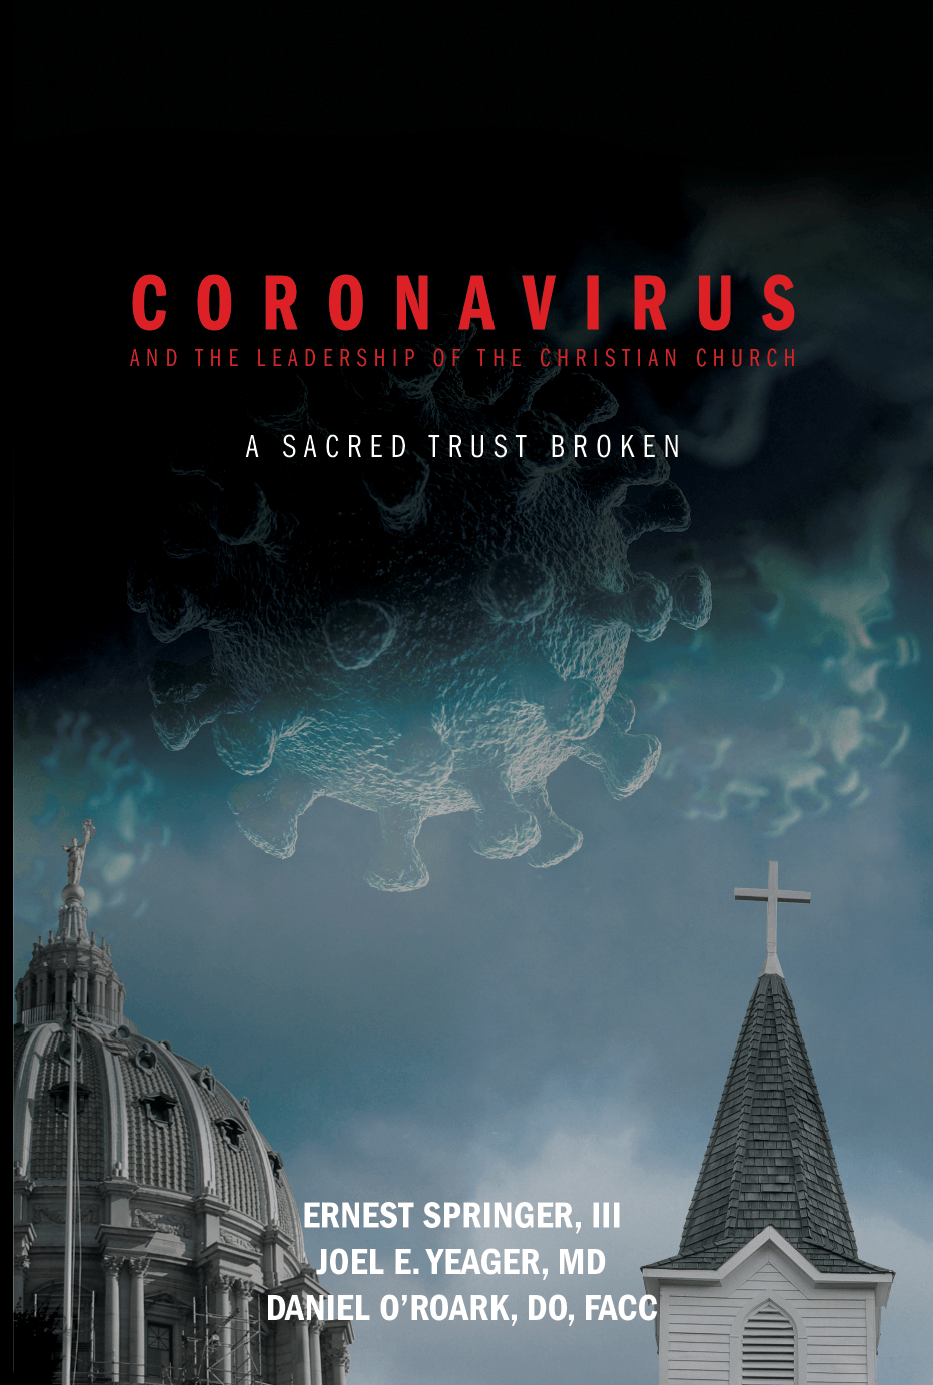 Coronavirus and the leadership of the Christian Church